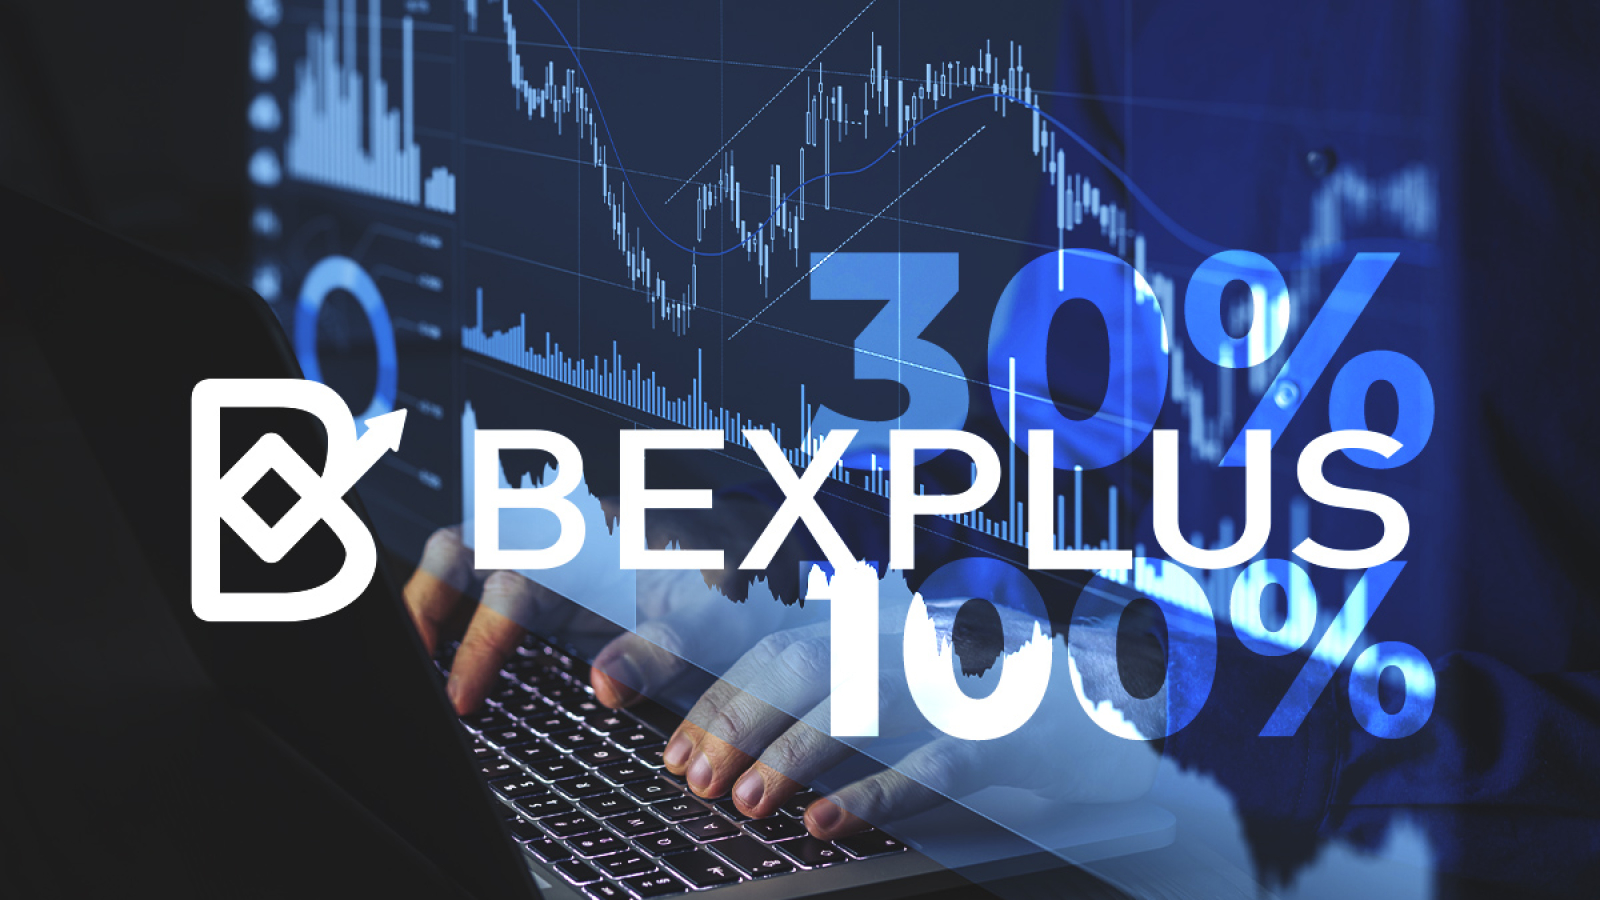 Bexplus Launches Up To 30% Interest Wallet, 100% Bonus Activity